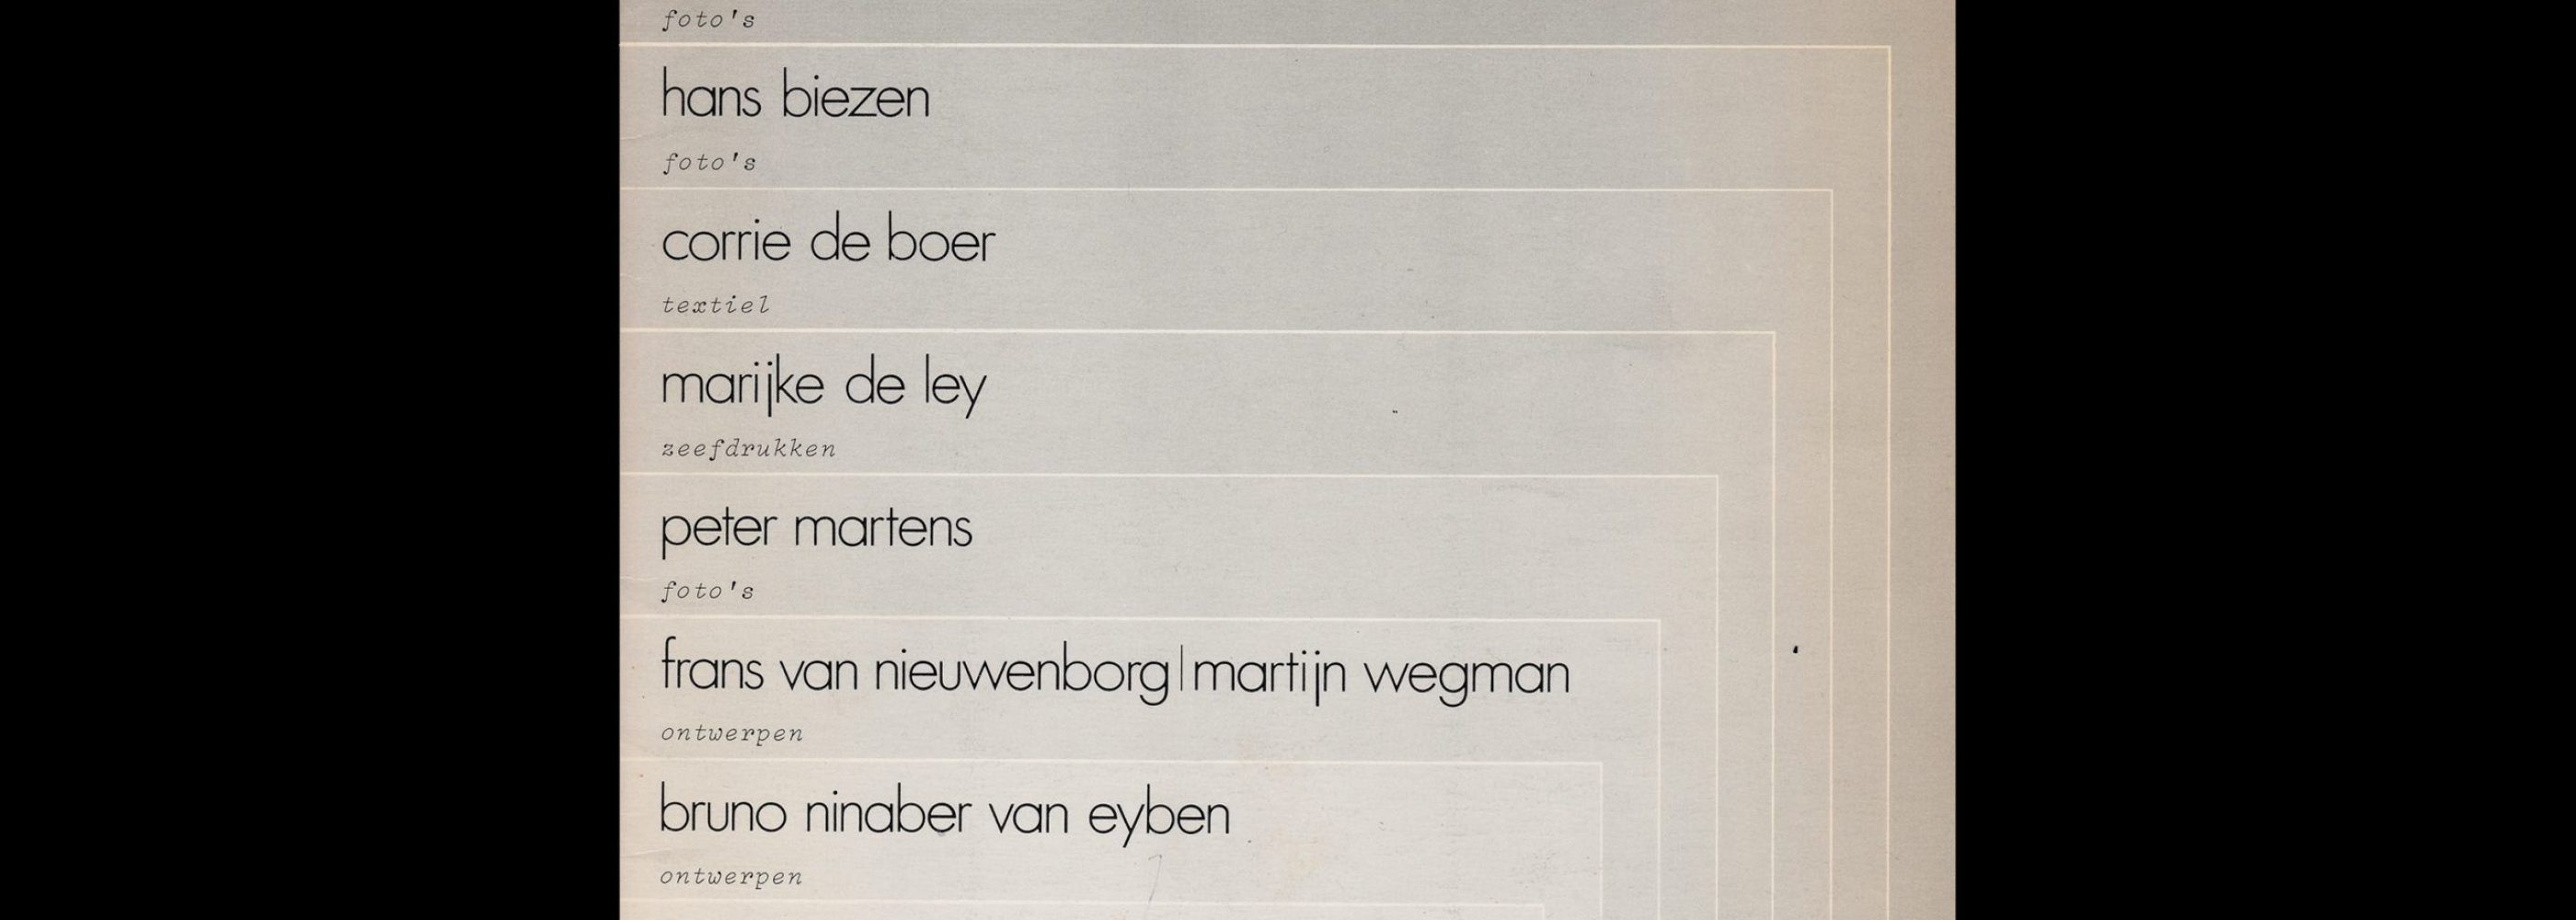 Atelier 14, Stedelijk Museum, Amsterdam, 1977 designed by Wim Crouwel and Daphne Duijvelschoff (Total Design)